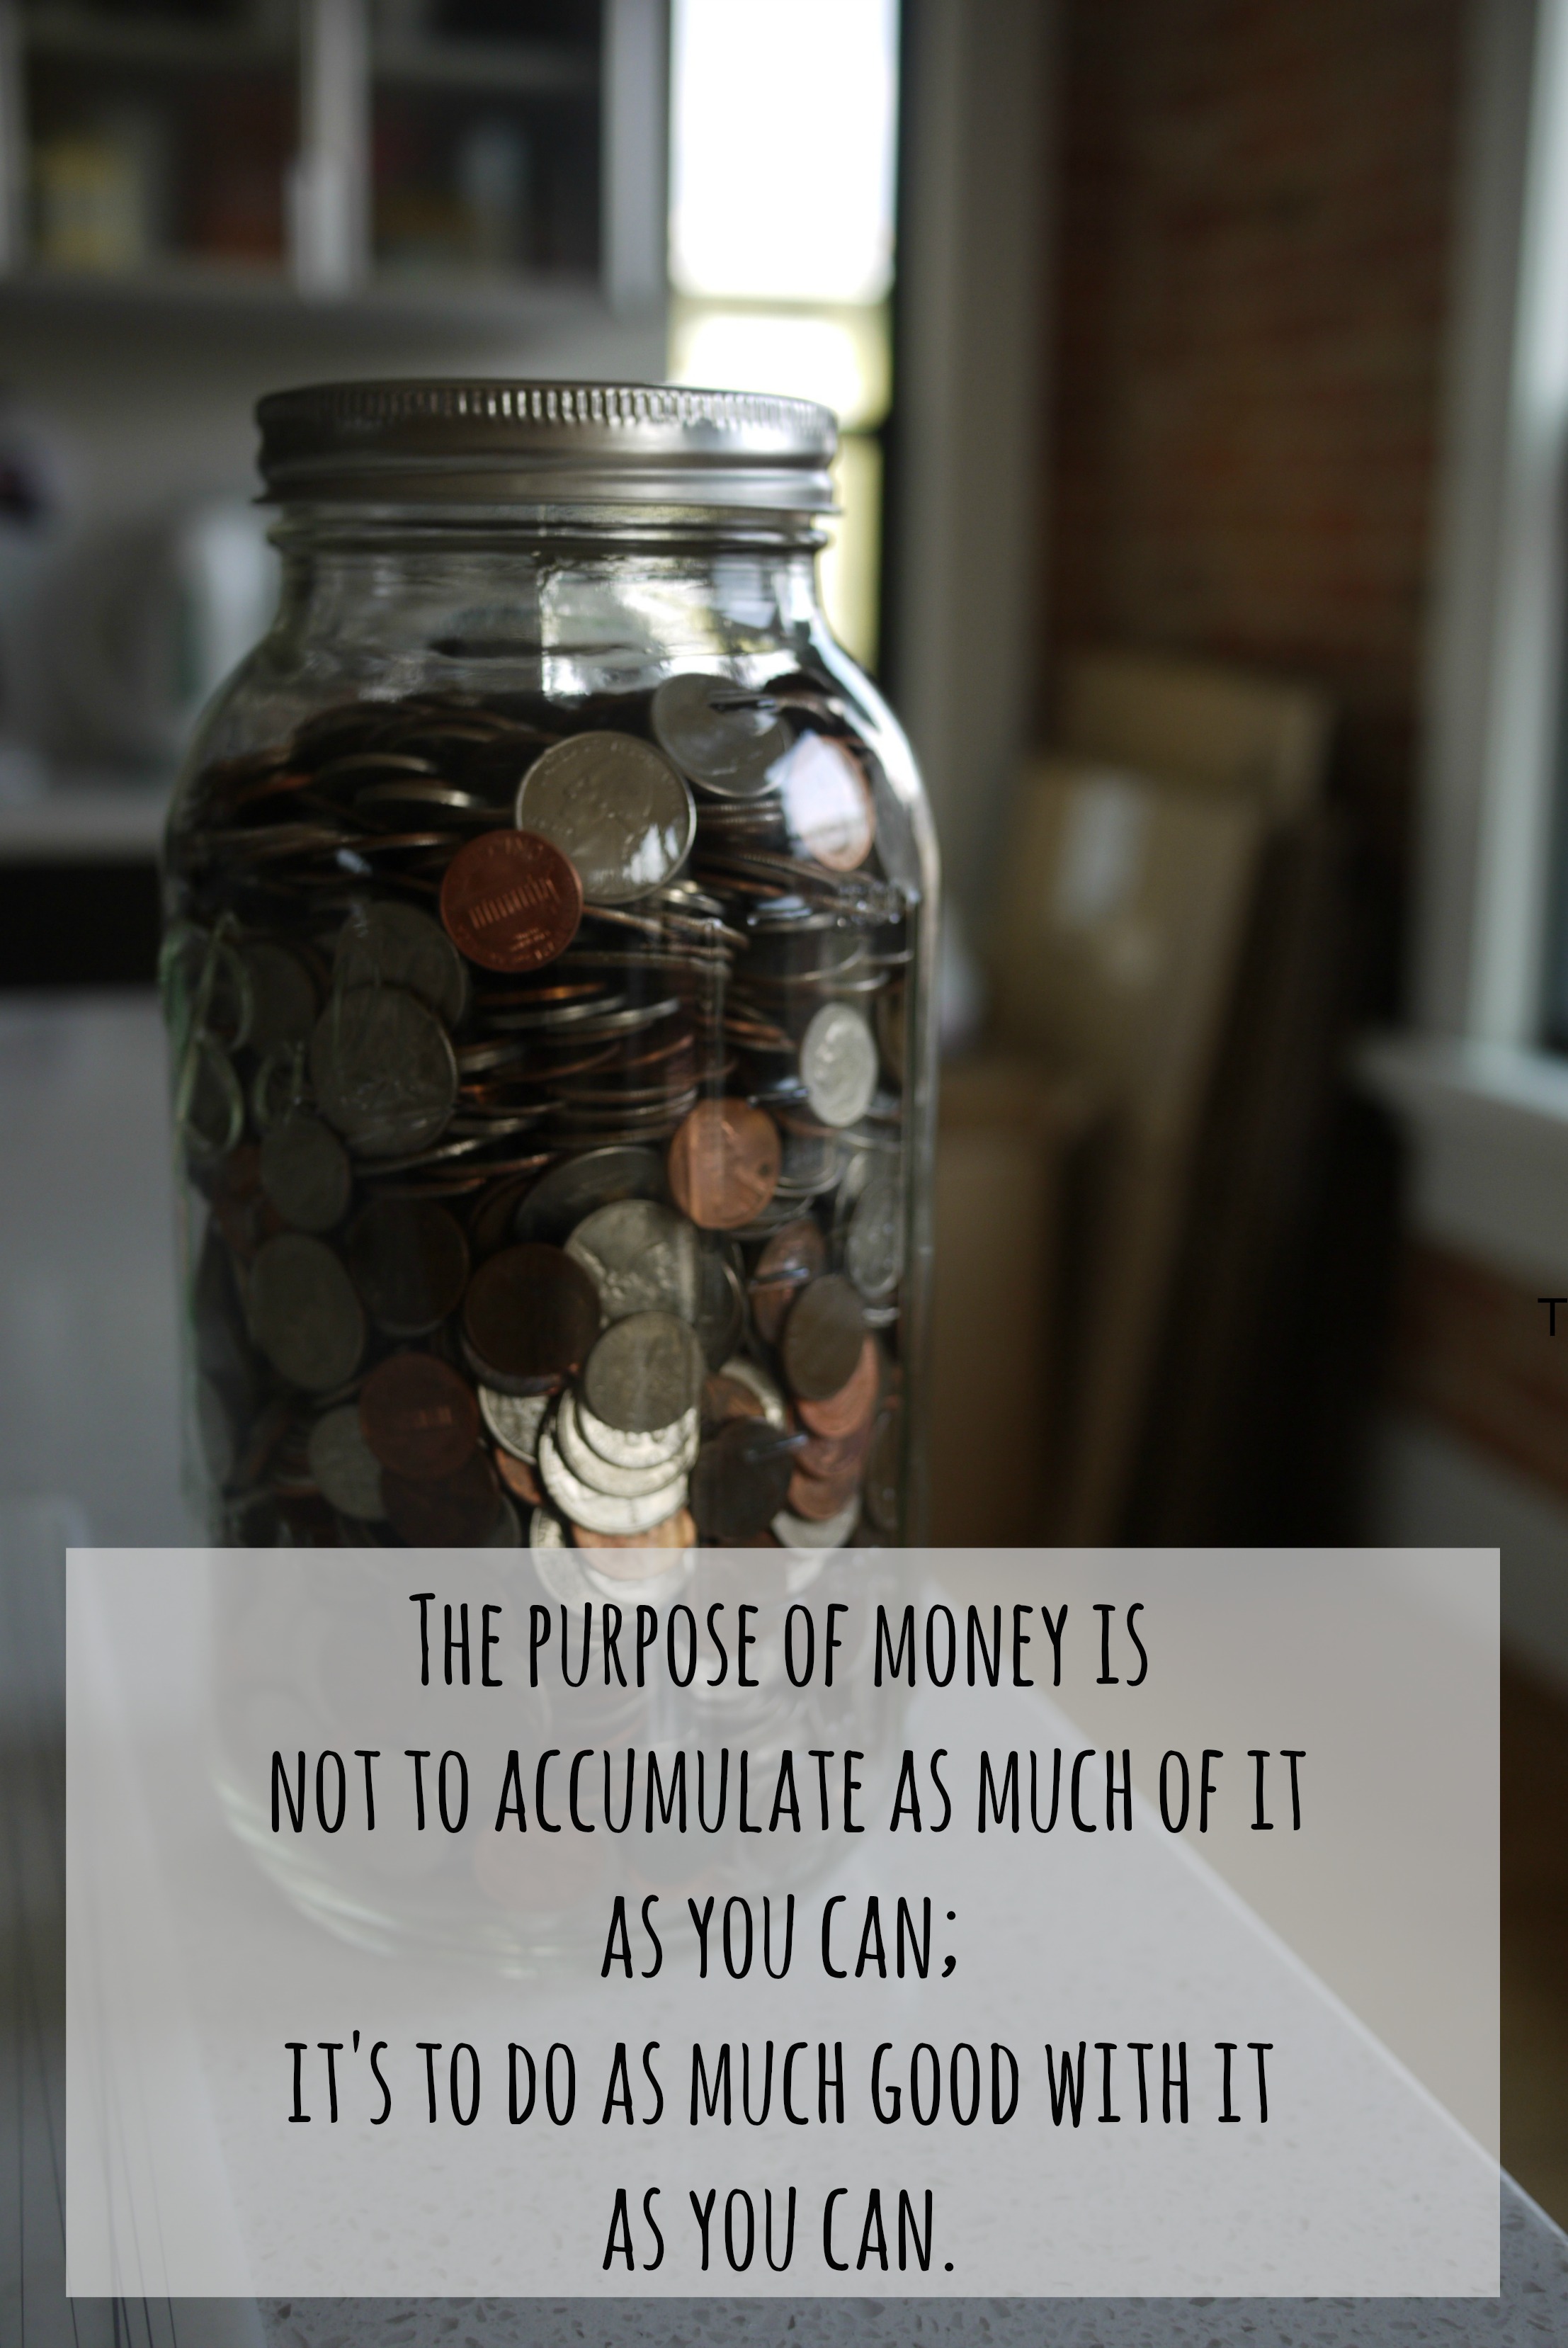 The purpose of money...